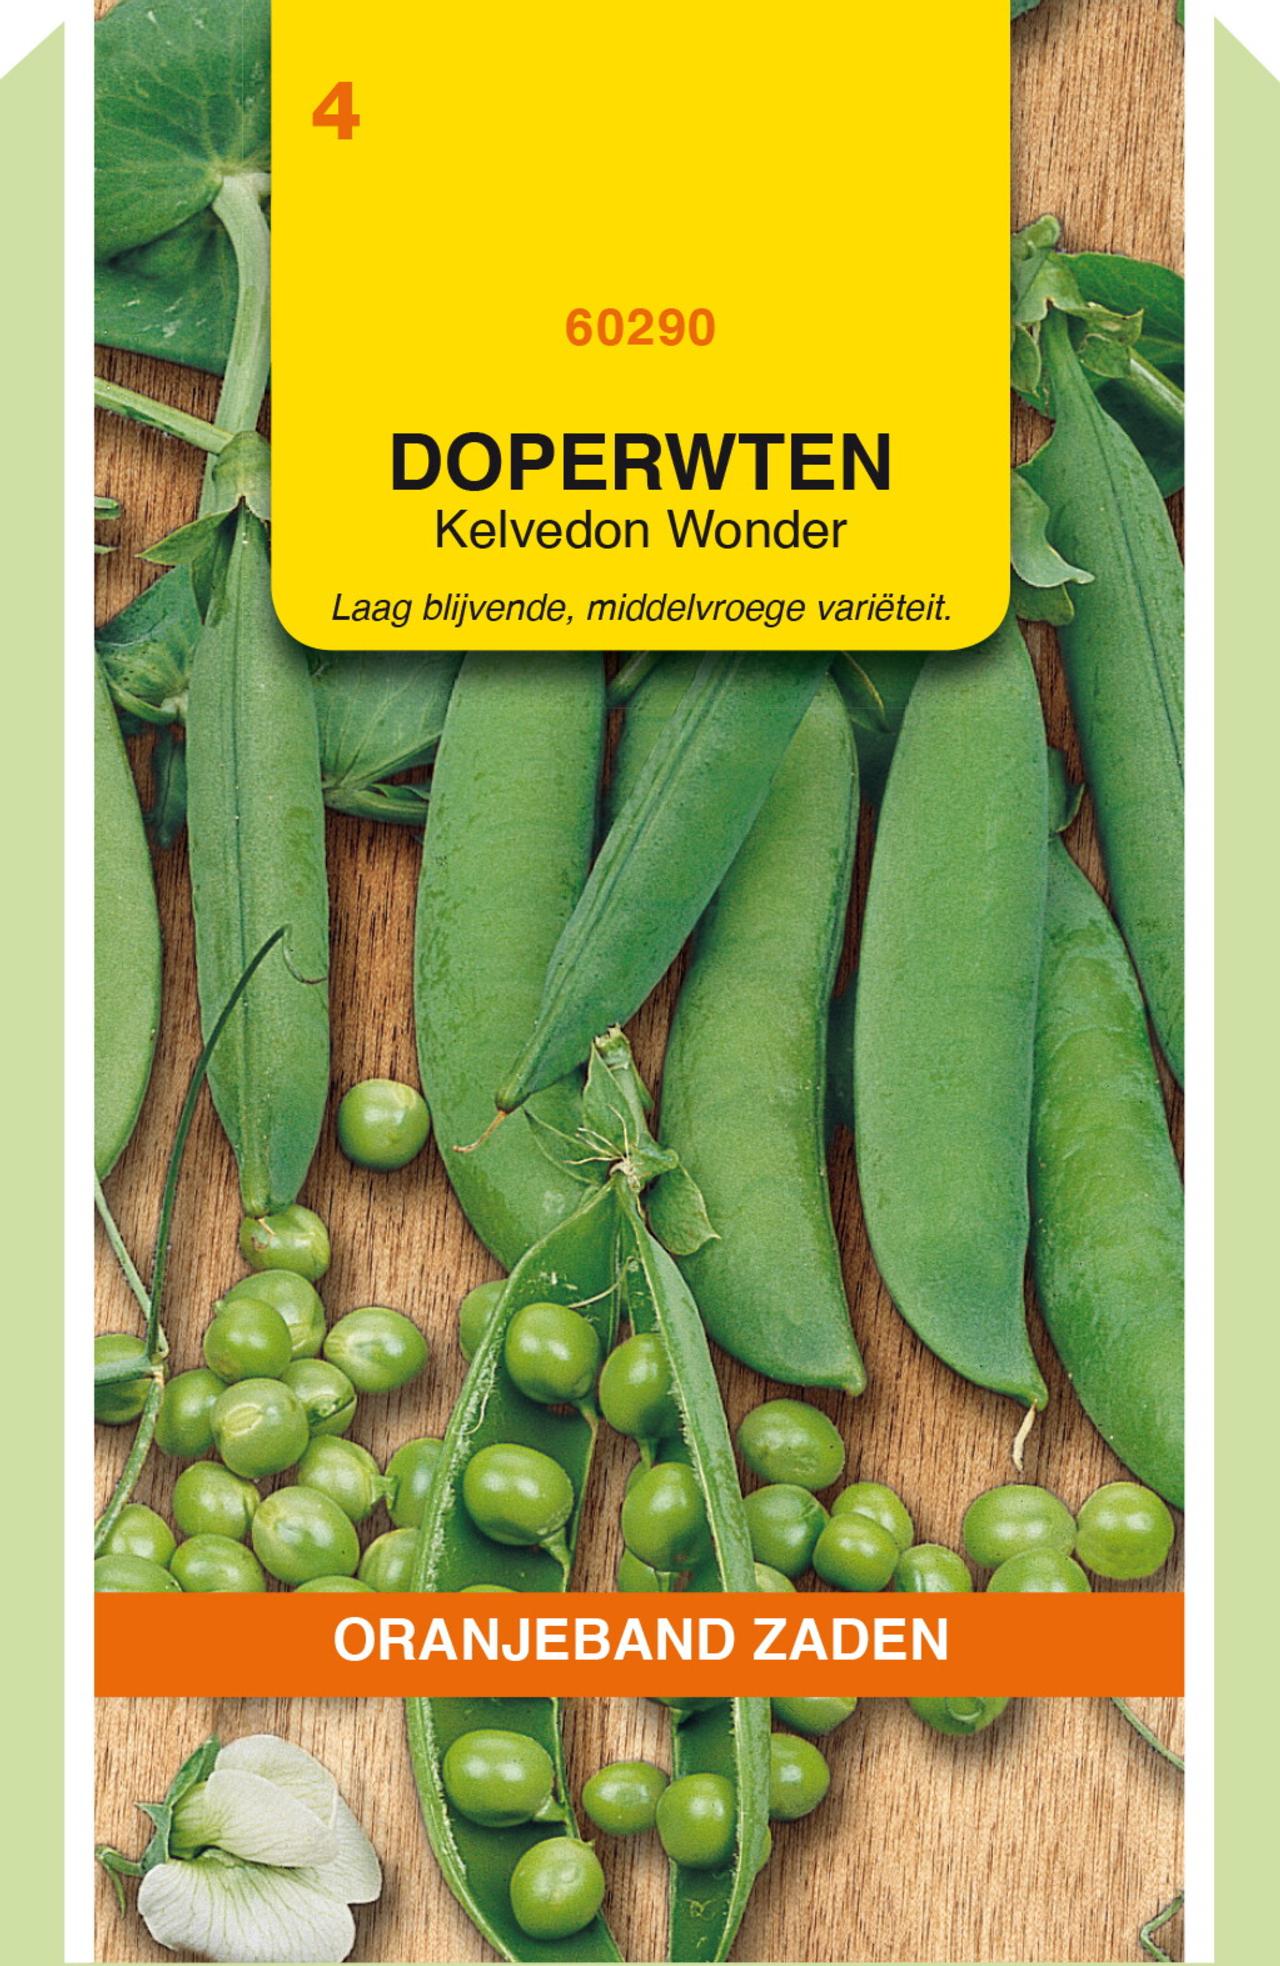 Pisum sativum 'Kelvedon Wonder' plant